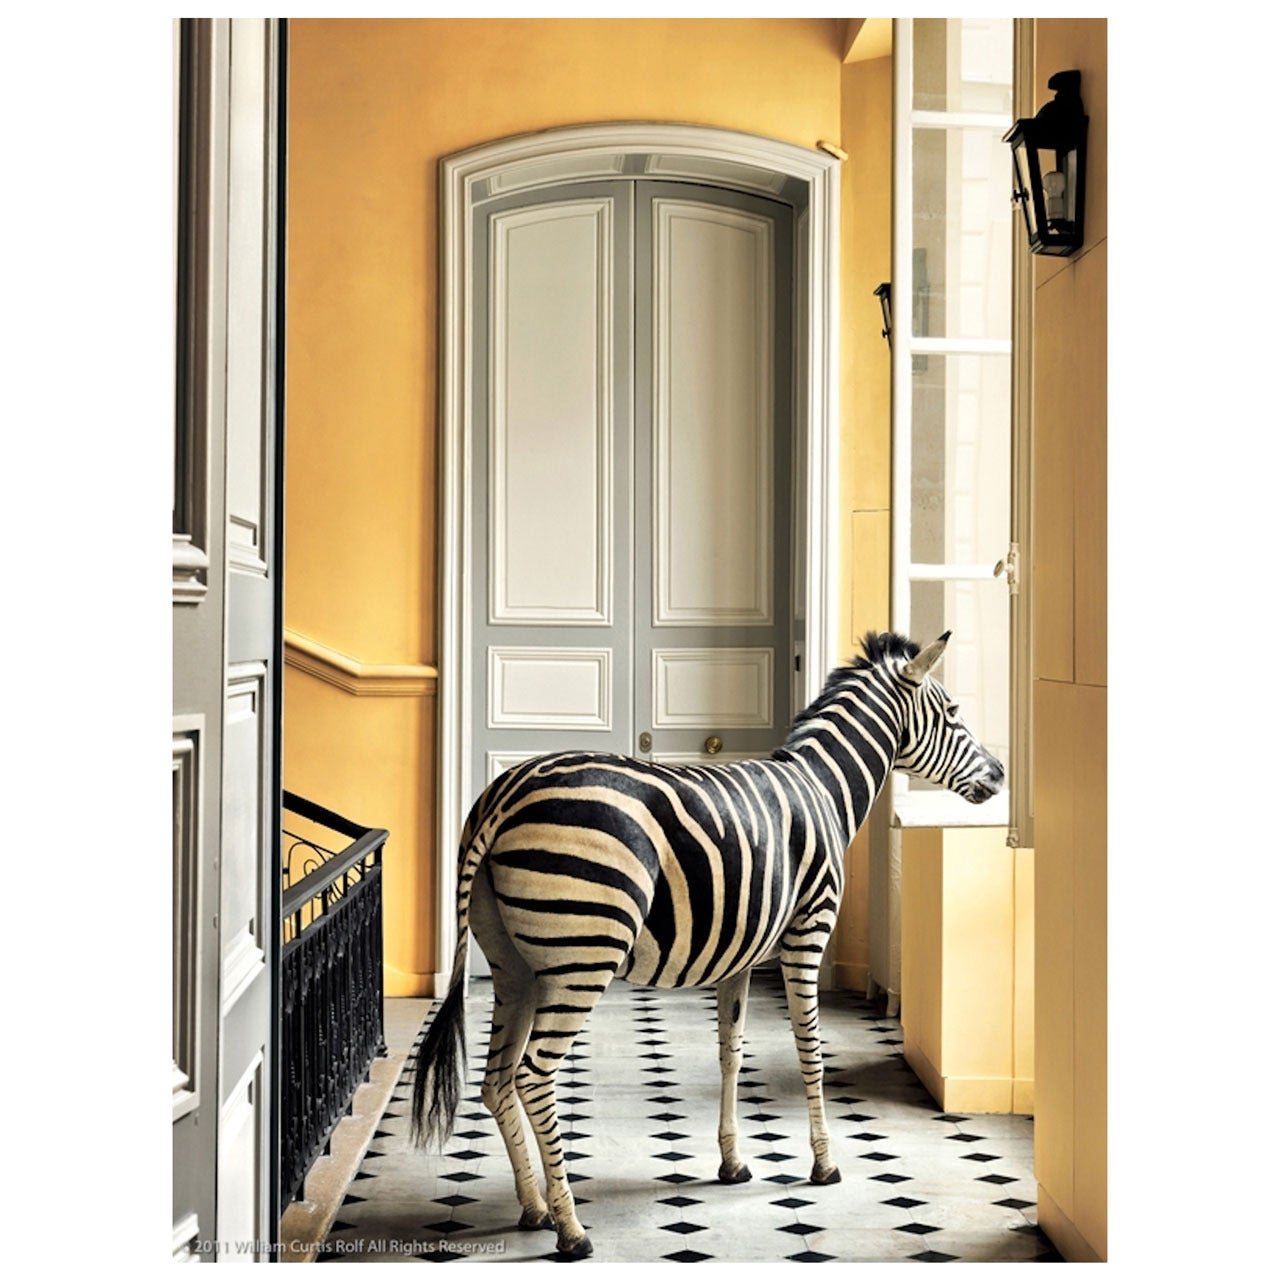 Deyrolle Zebra Composition #2